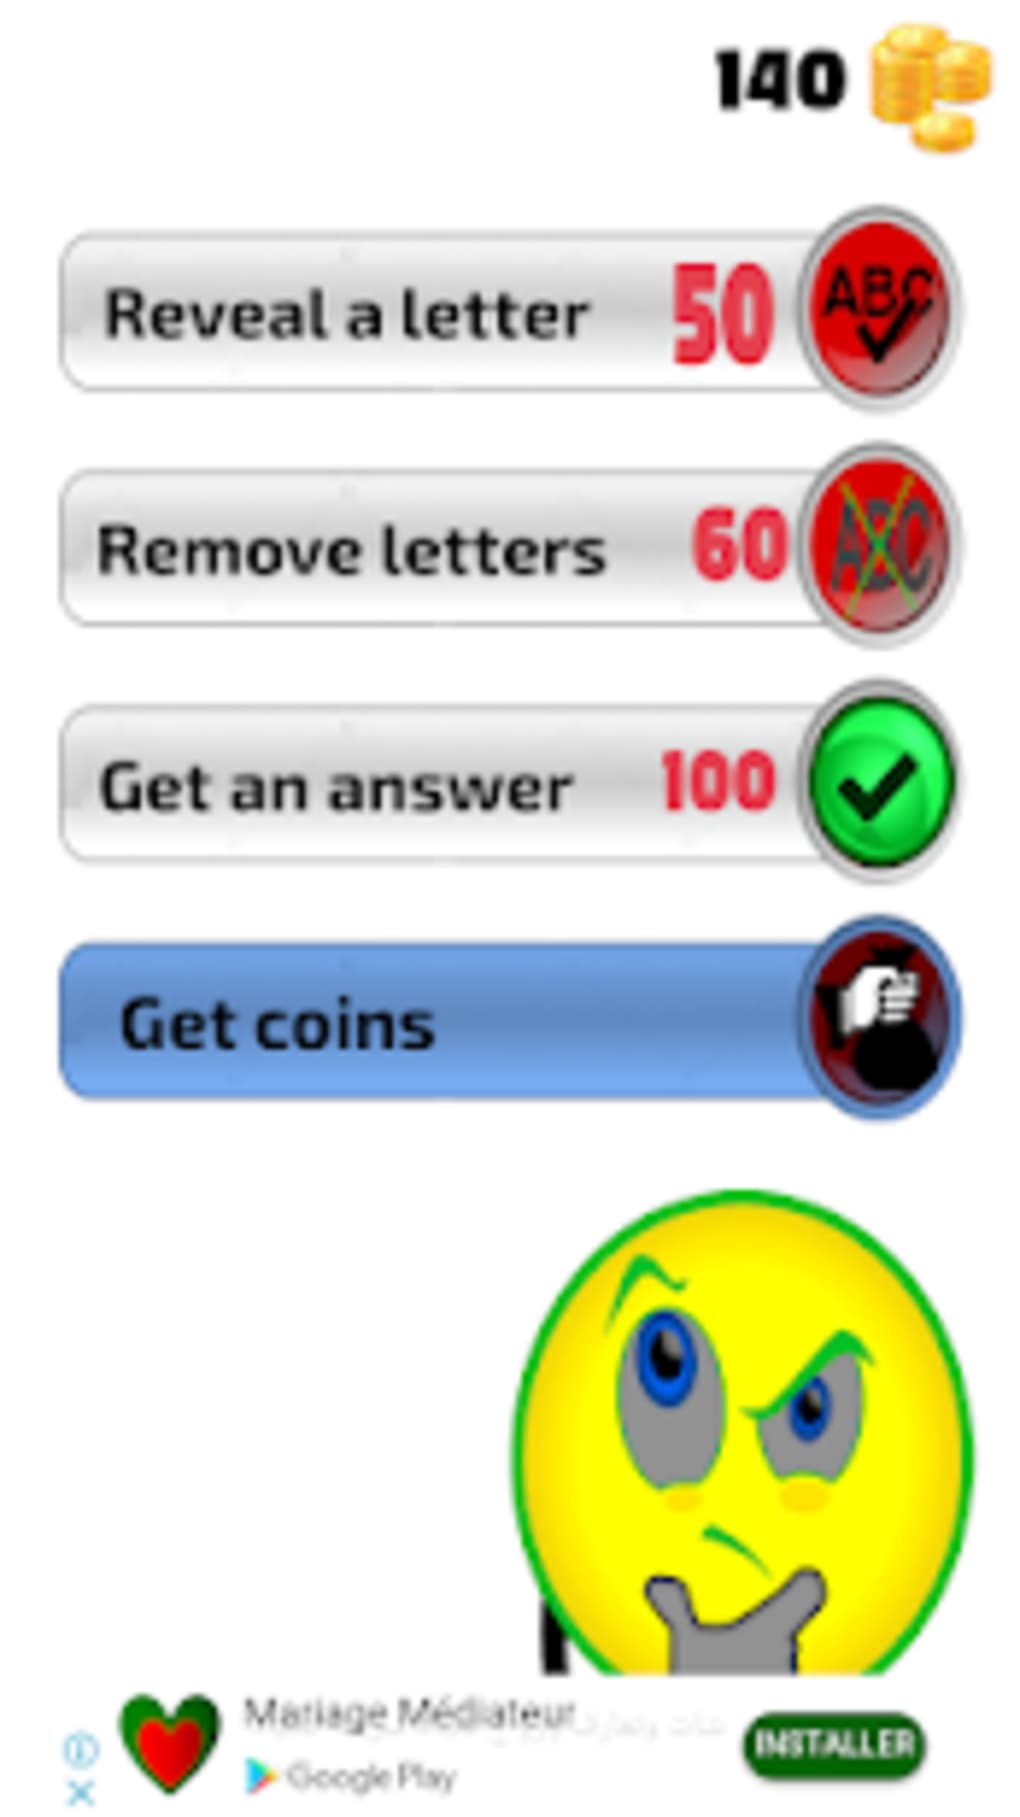 Memory Game: Logo Quiz APK (Android Game) - Free Download